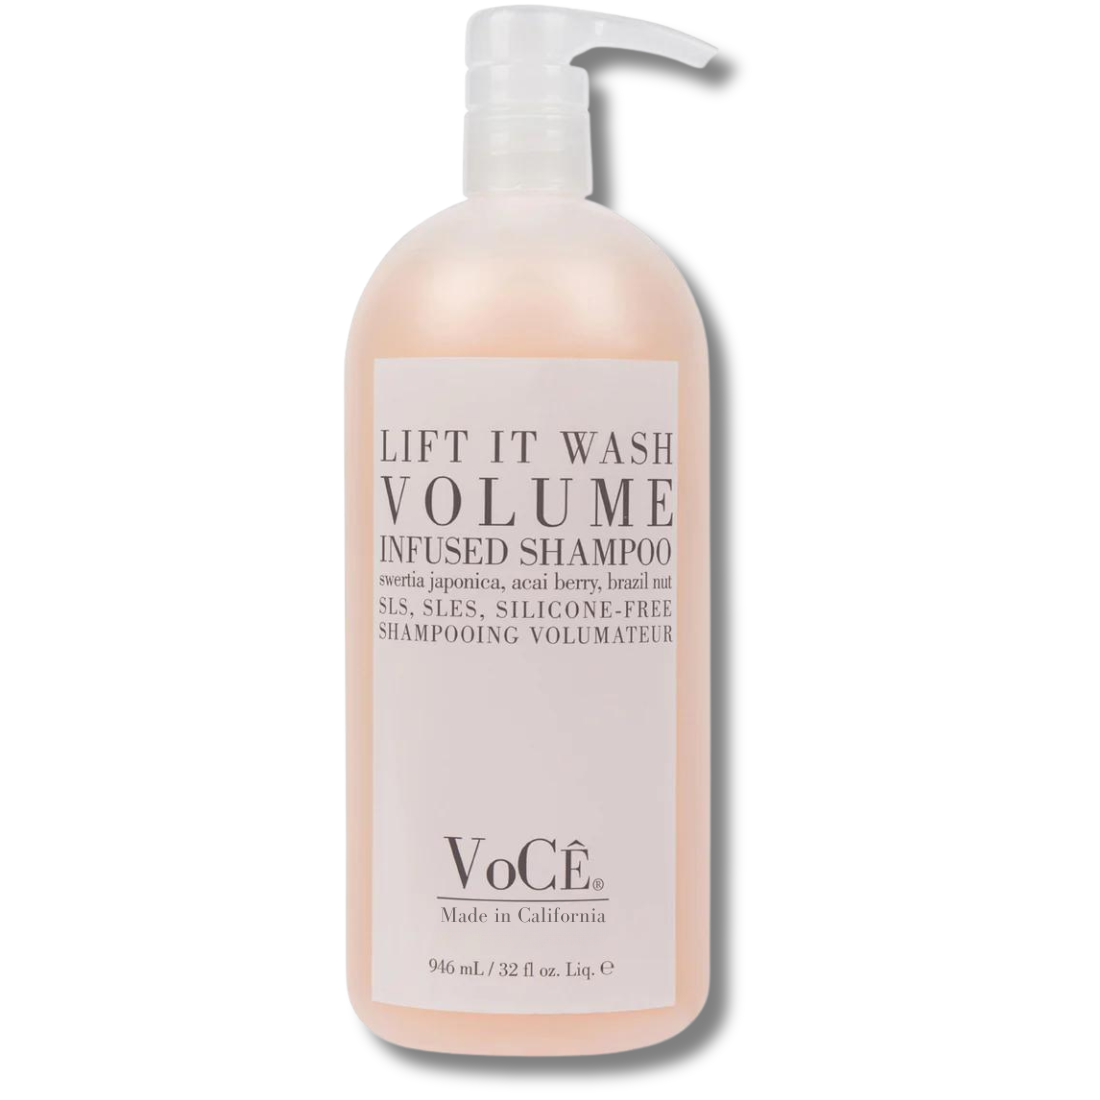 VoCÊ Haircare – Natural | Volume Shampoo - Wash | Volume Infused | Non-Toxic, Cruelty-Free, Vegan Haircare (32oz)